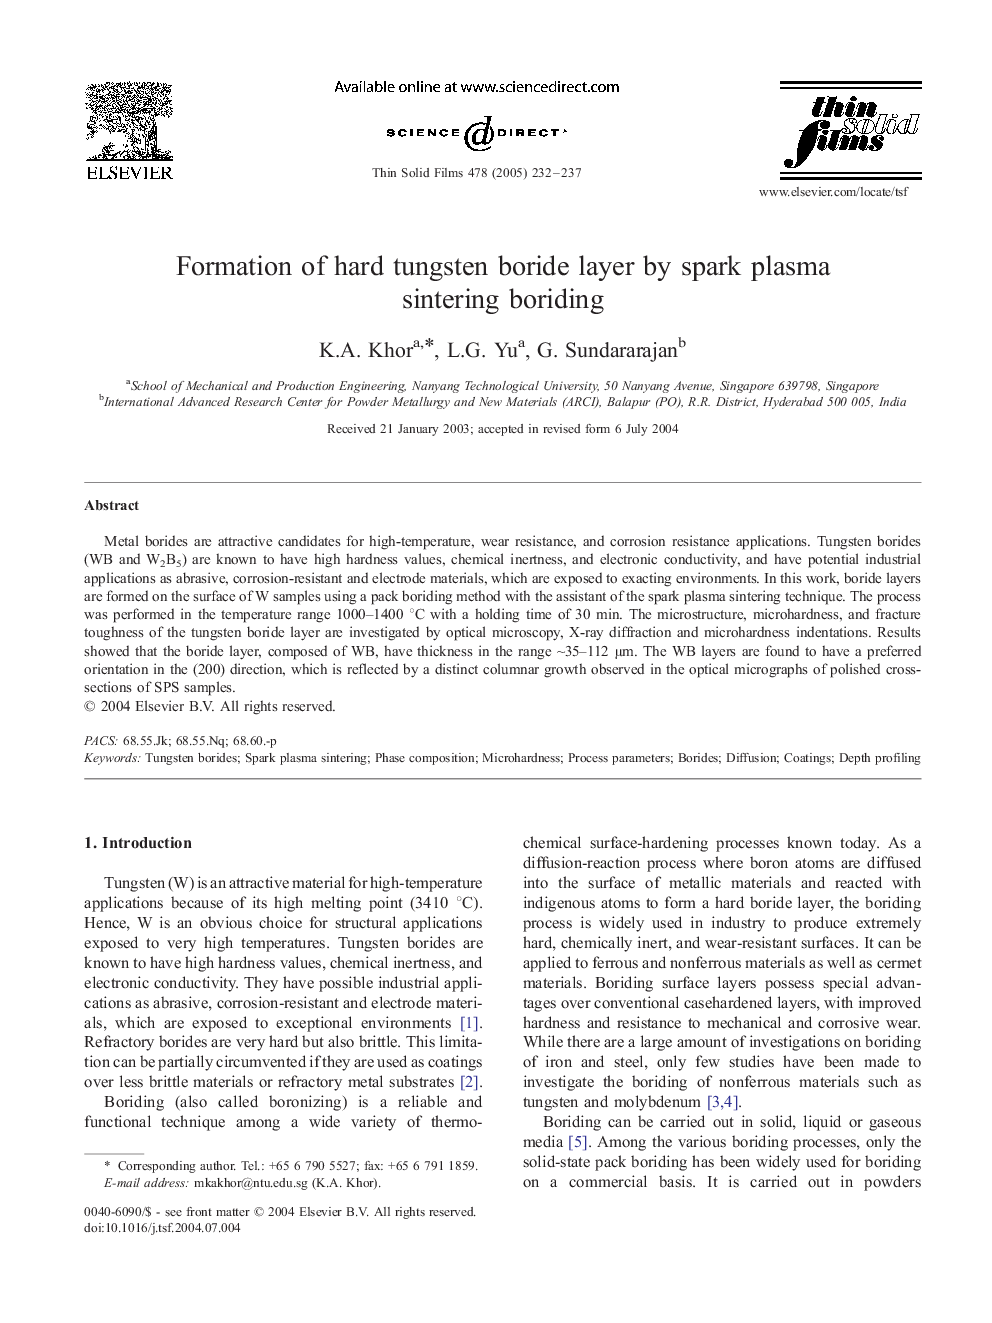 Formation of hard tungsten boride layer by spark plasma sintering boriding